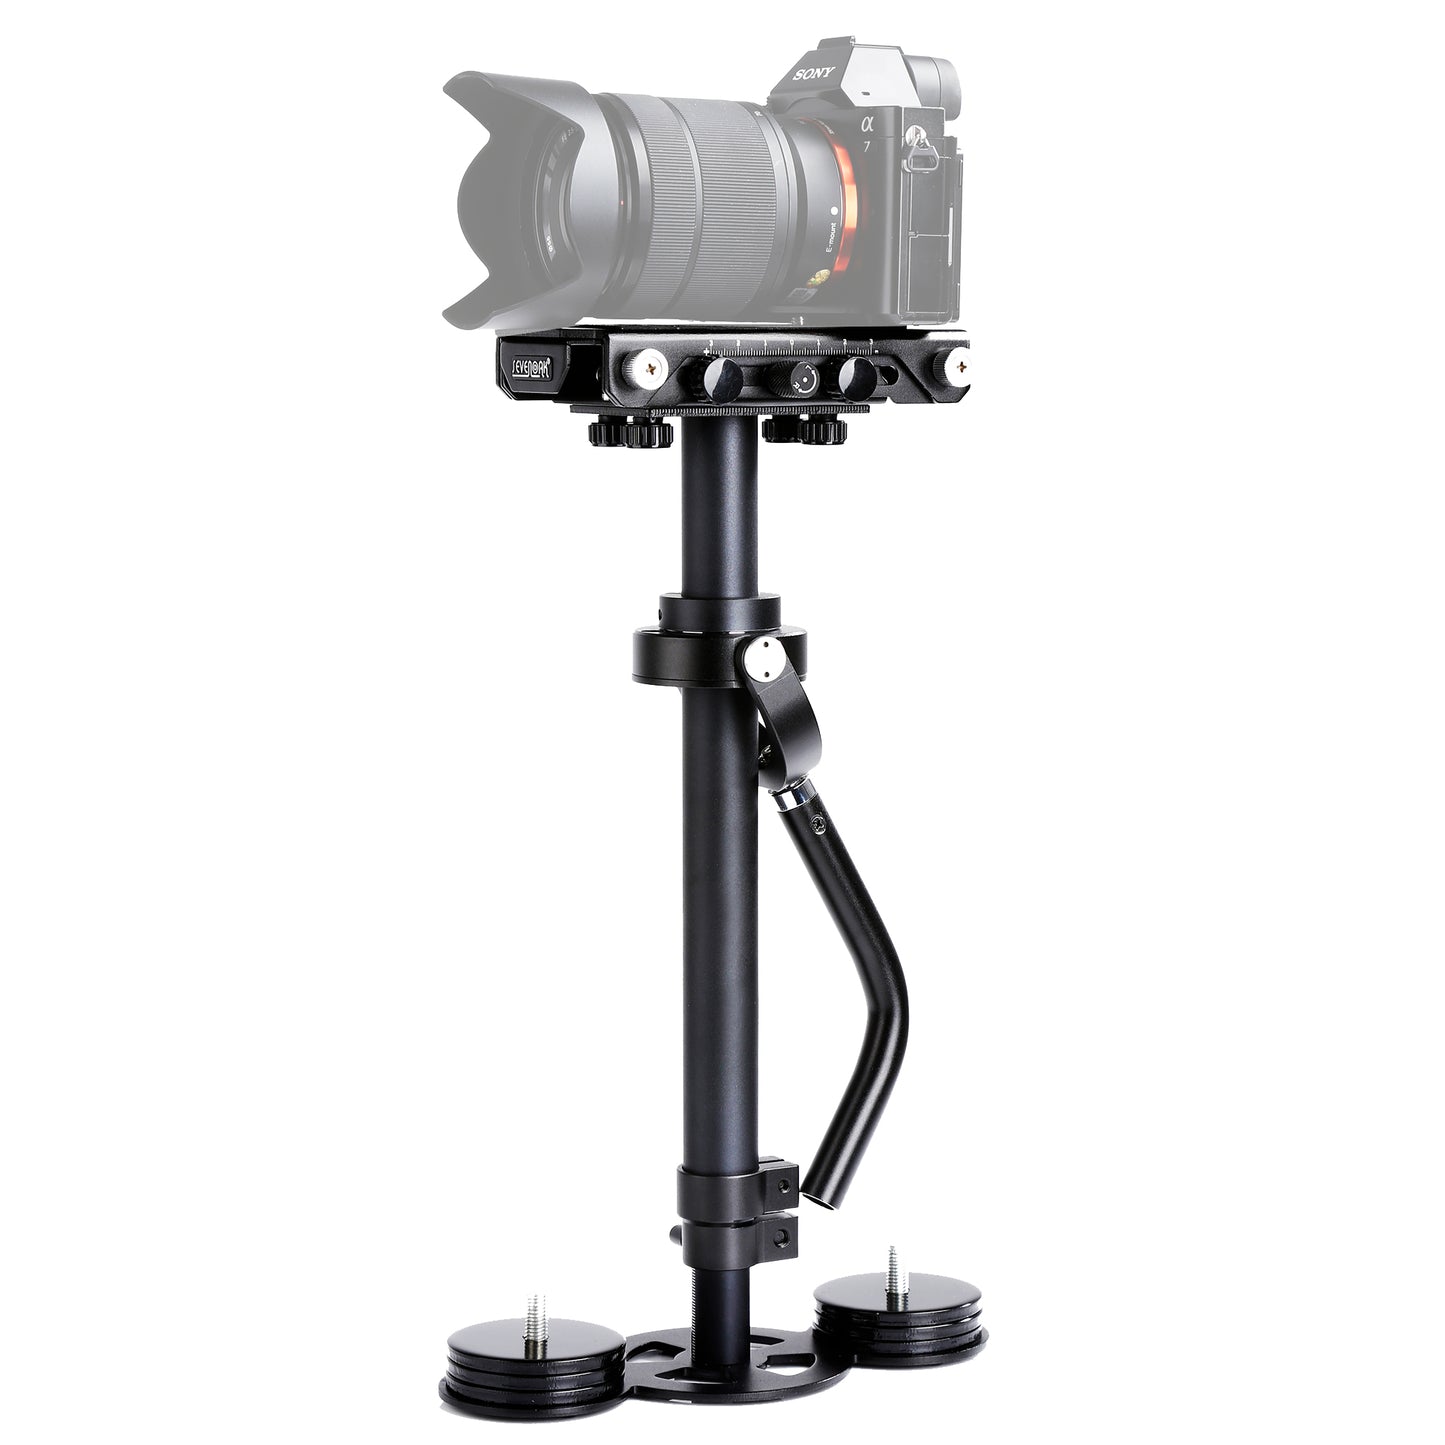 Sevenoak SK-SW03N Professional Action Video Stabilizer Steadycam Up to 1.5kg